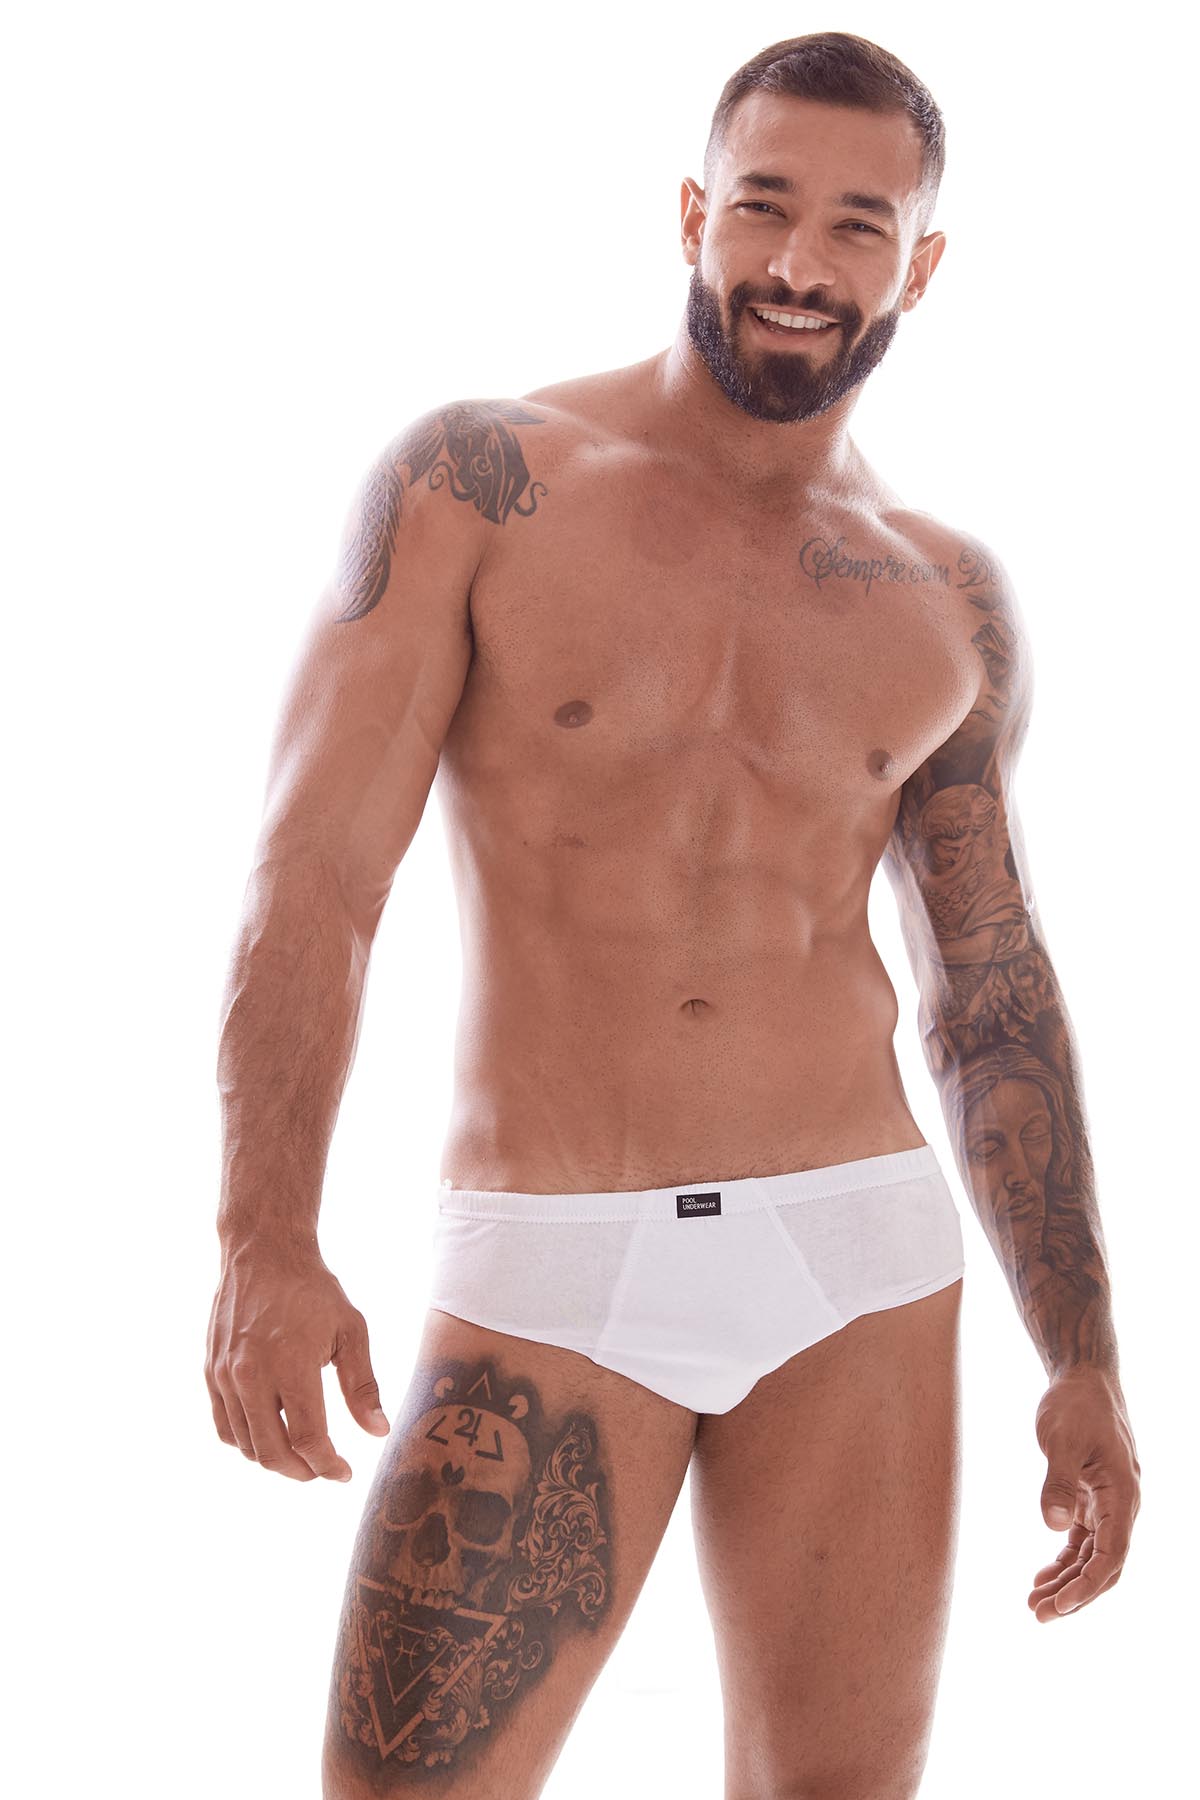 Bruno Mooneyhan by Pedro Fonseca for Brazilian Male Model 6 - 巴西硬汉男模 Bruno Mooneyhan / Pedro Fonseca摄影作品